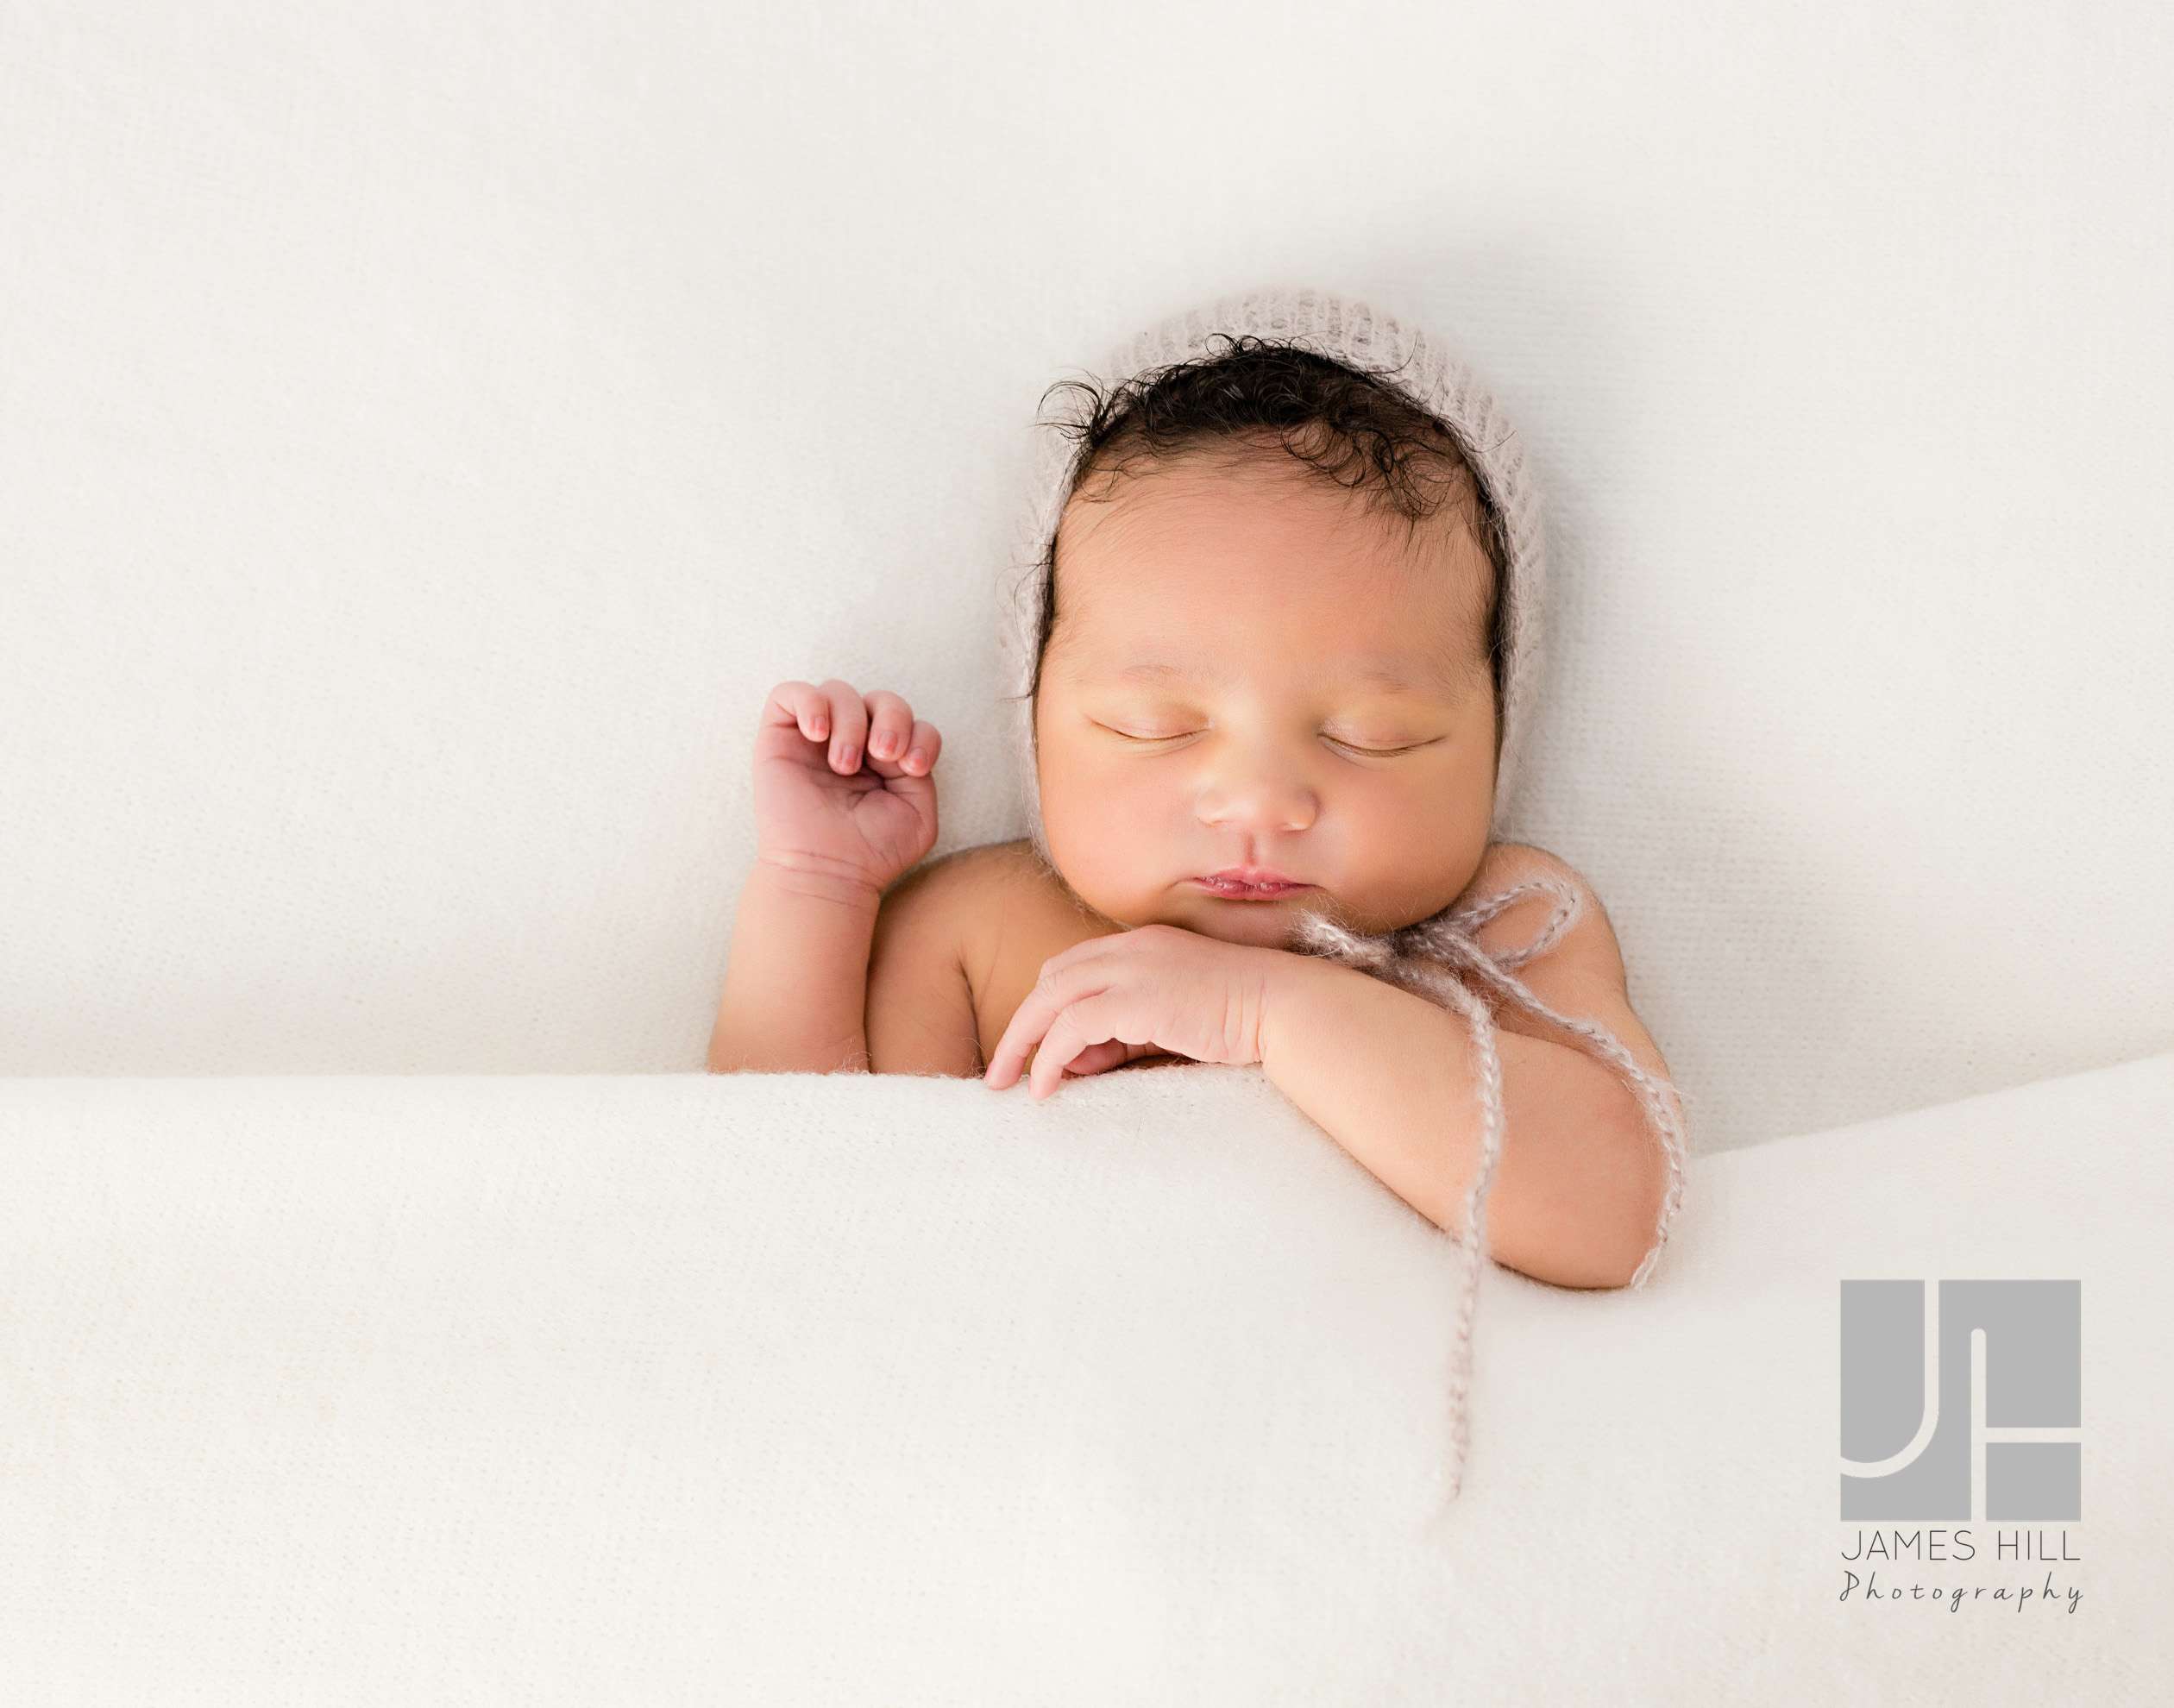 Perfectly precious newborn portrait!